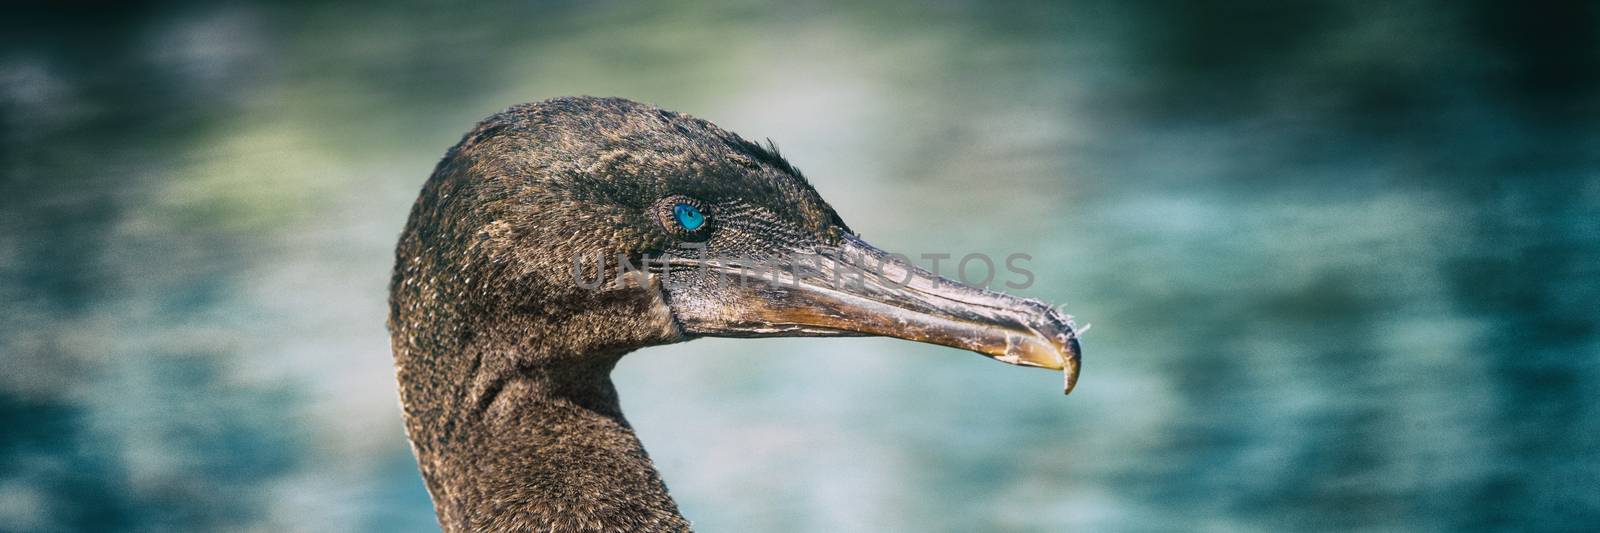 Galapagos animals wildlife - bird flightless cormorant aka galapagos cormorants by sea on Fernandina island, Espinoza Point, Ecuador, South America travel. Close up of characteristic blue eyes.